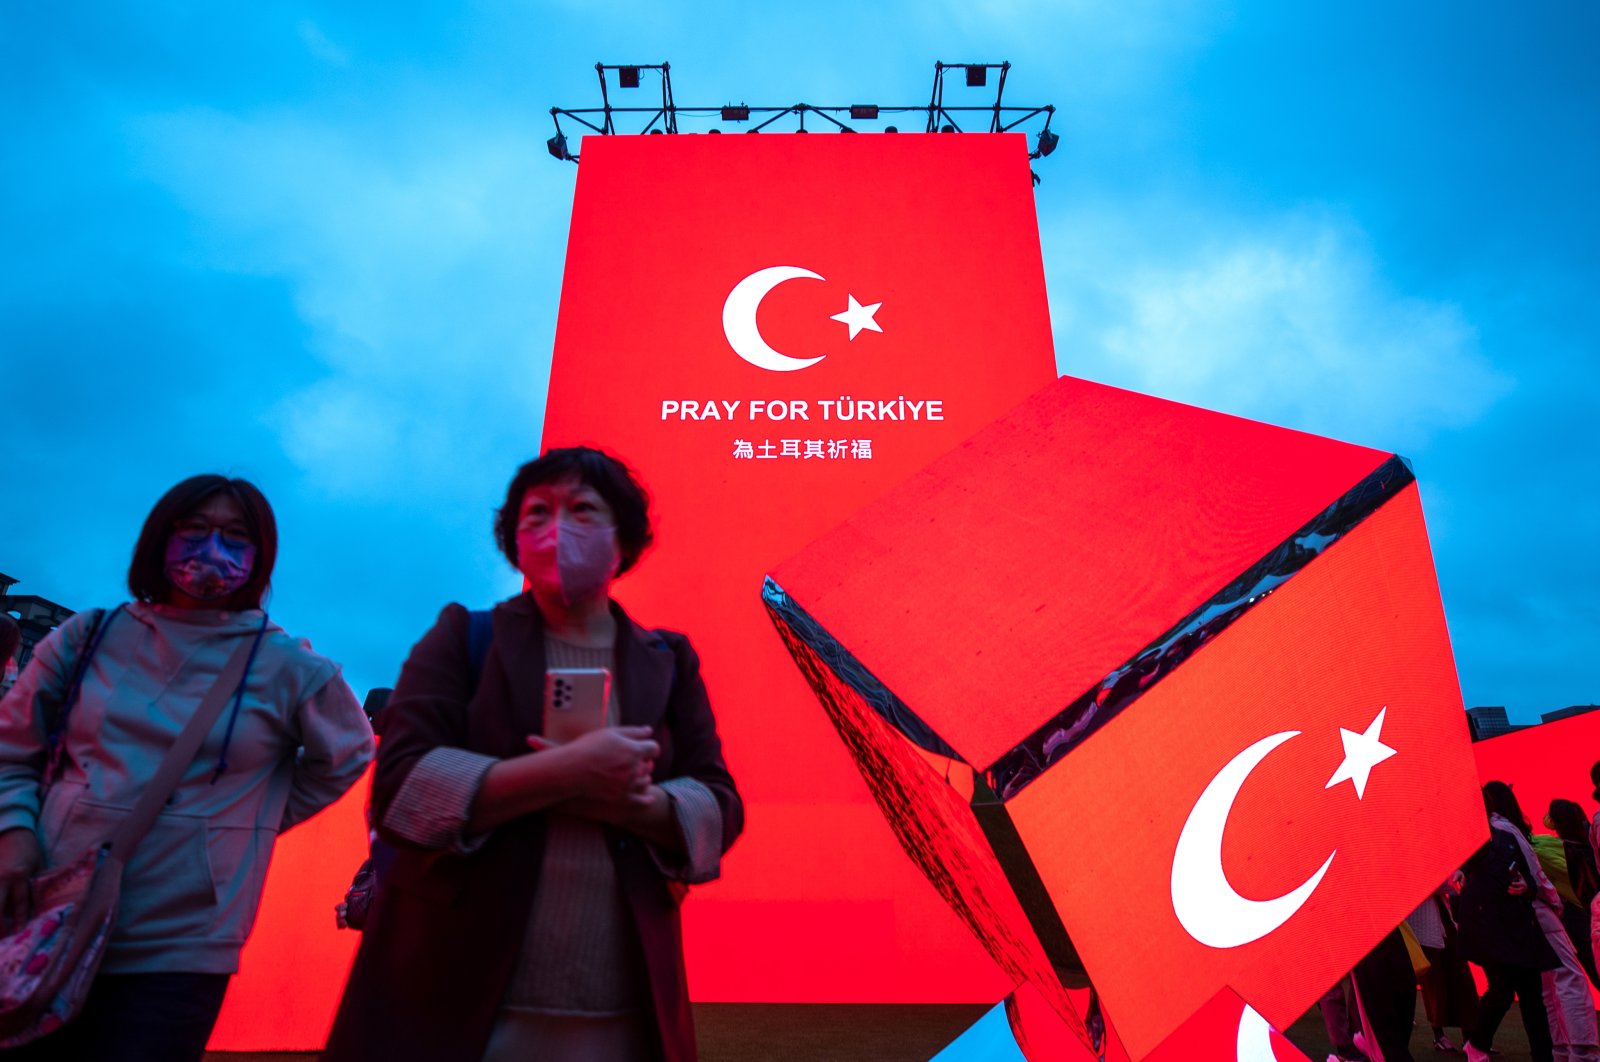 People walk past a LED screen displaying a "Pray for Türkiye" message in Taipei, Taiwan, Feb. 8, 2023. (EPA Photo)